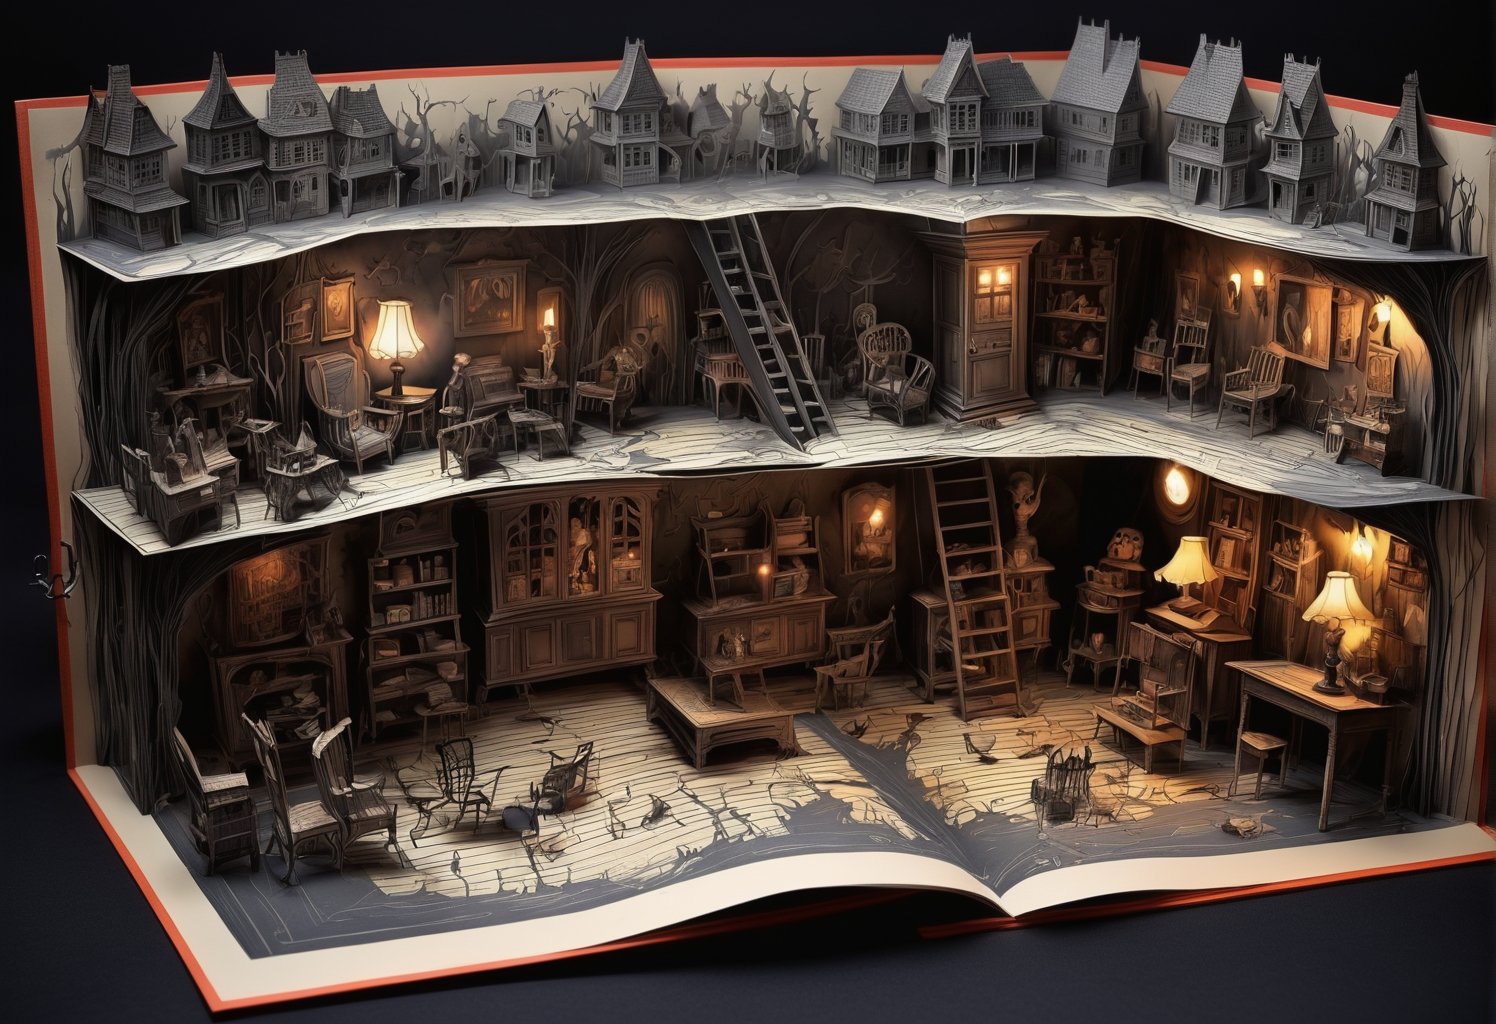 Pop-up book (basement in a haunted house),LegendDarkFantasy